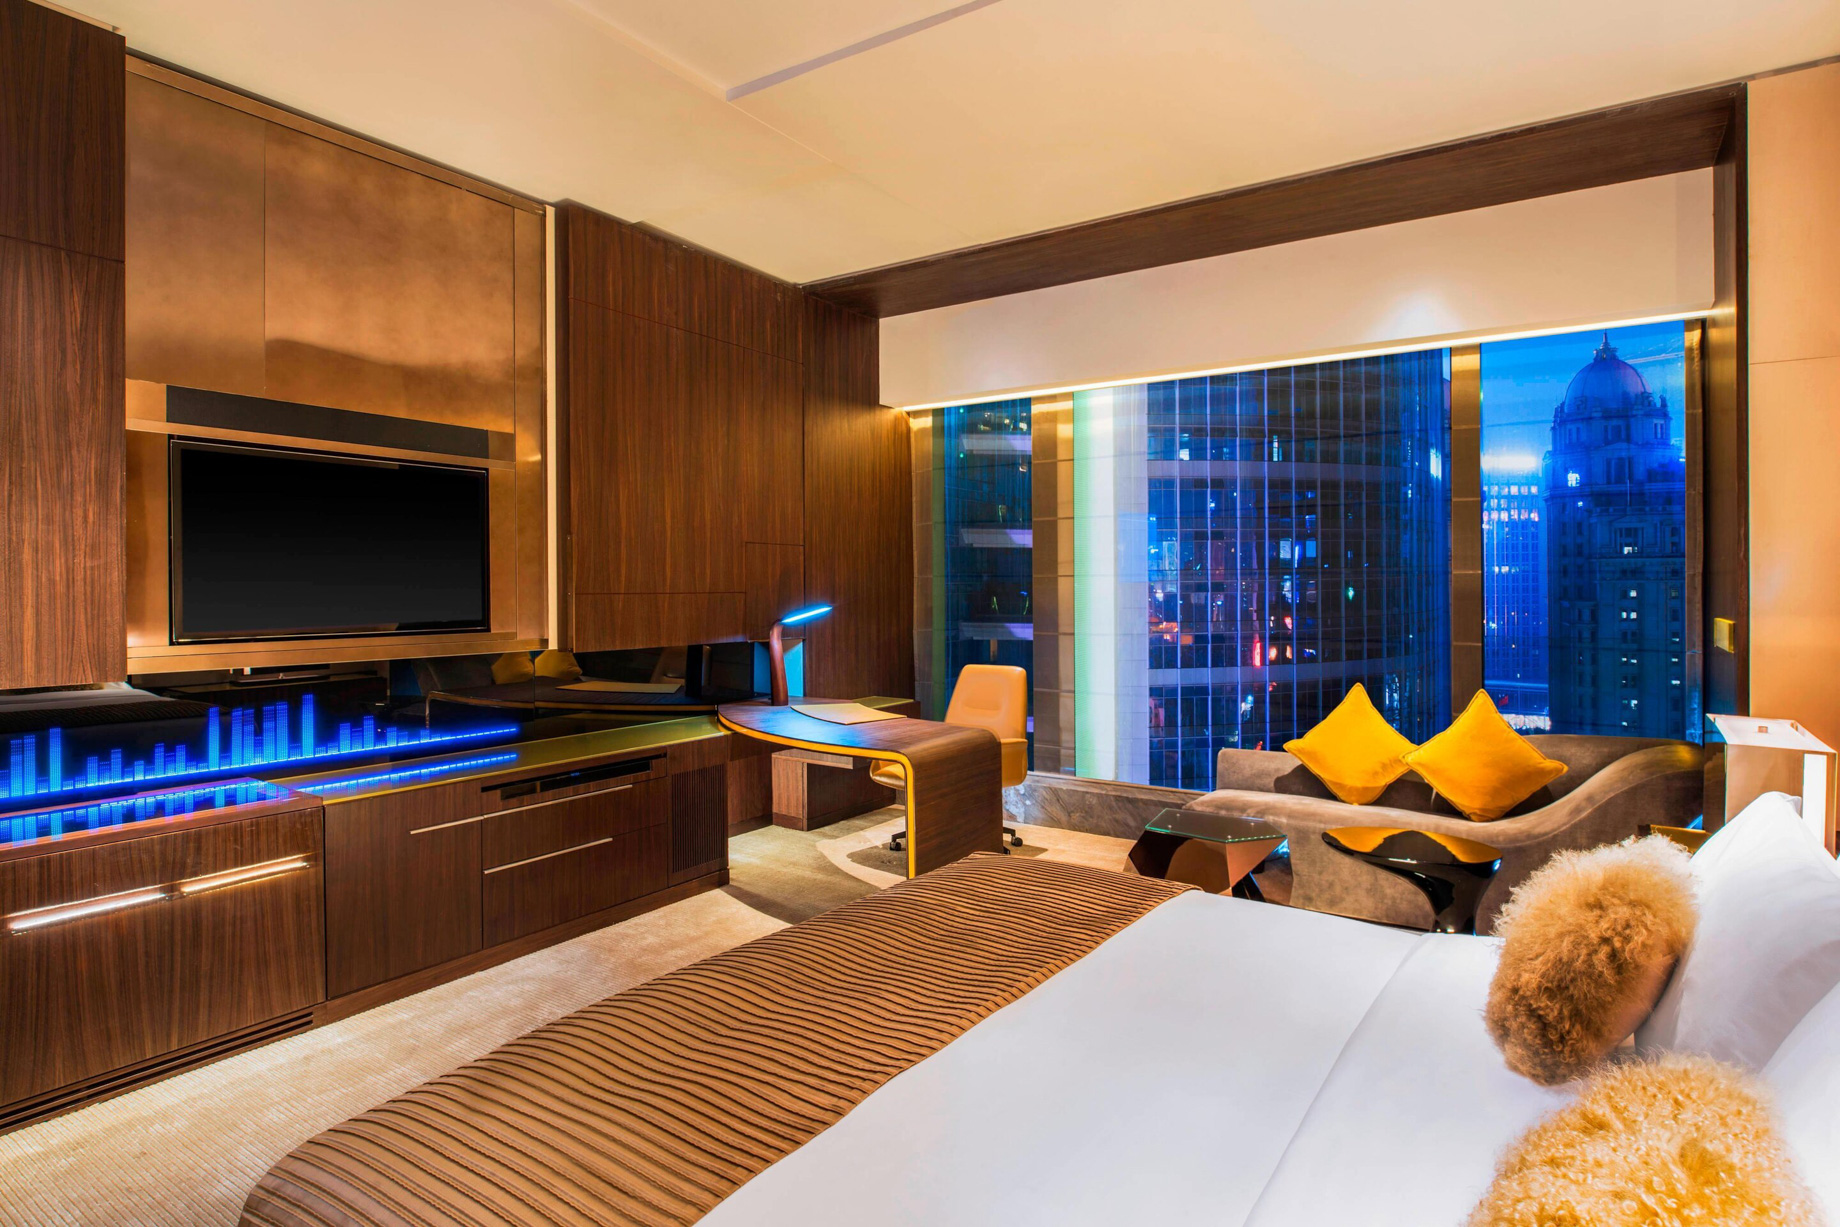 W Guangzhou Hotel – Tianhe District, Guangzhou, China – Spectacular Design Guest Room Fire Design